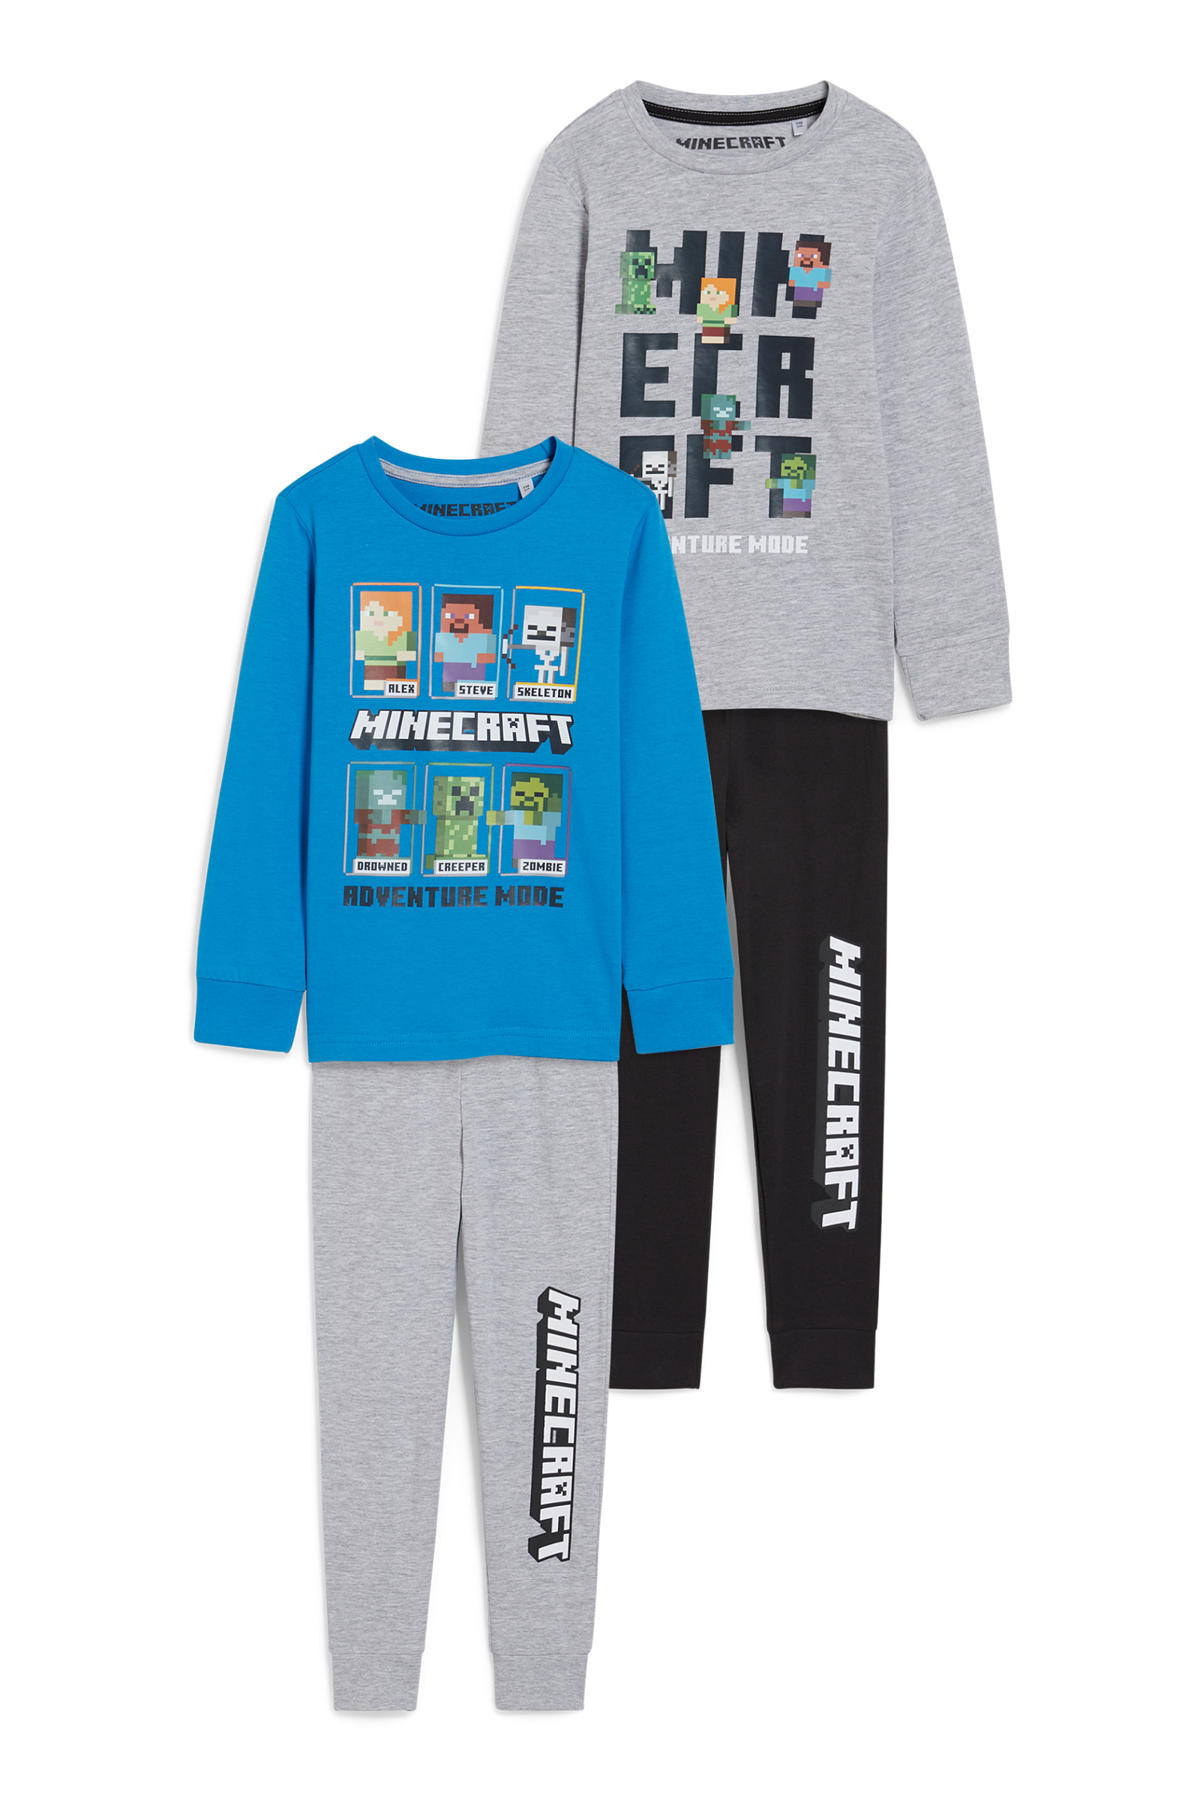 Horzel geeuwen Additief C&A Minecraft Minecraft pyjama - set van 2 blauw/grijs | wehkamp